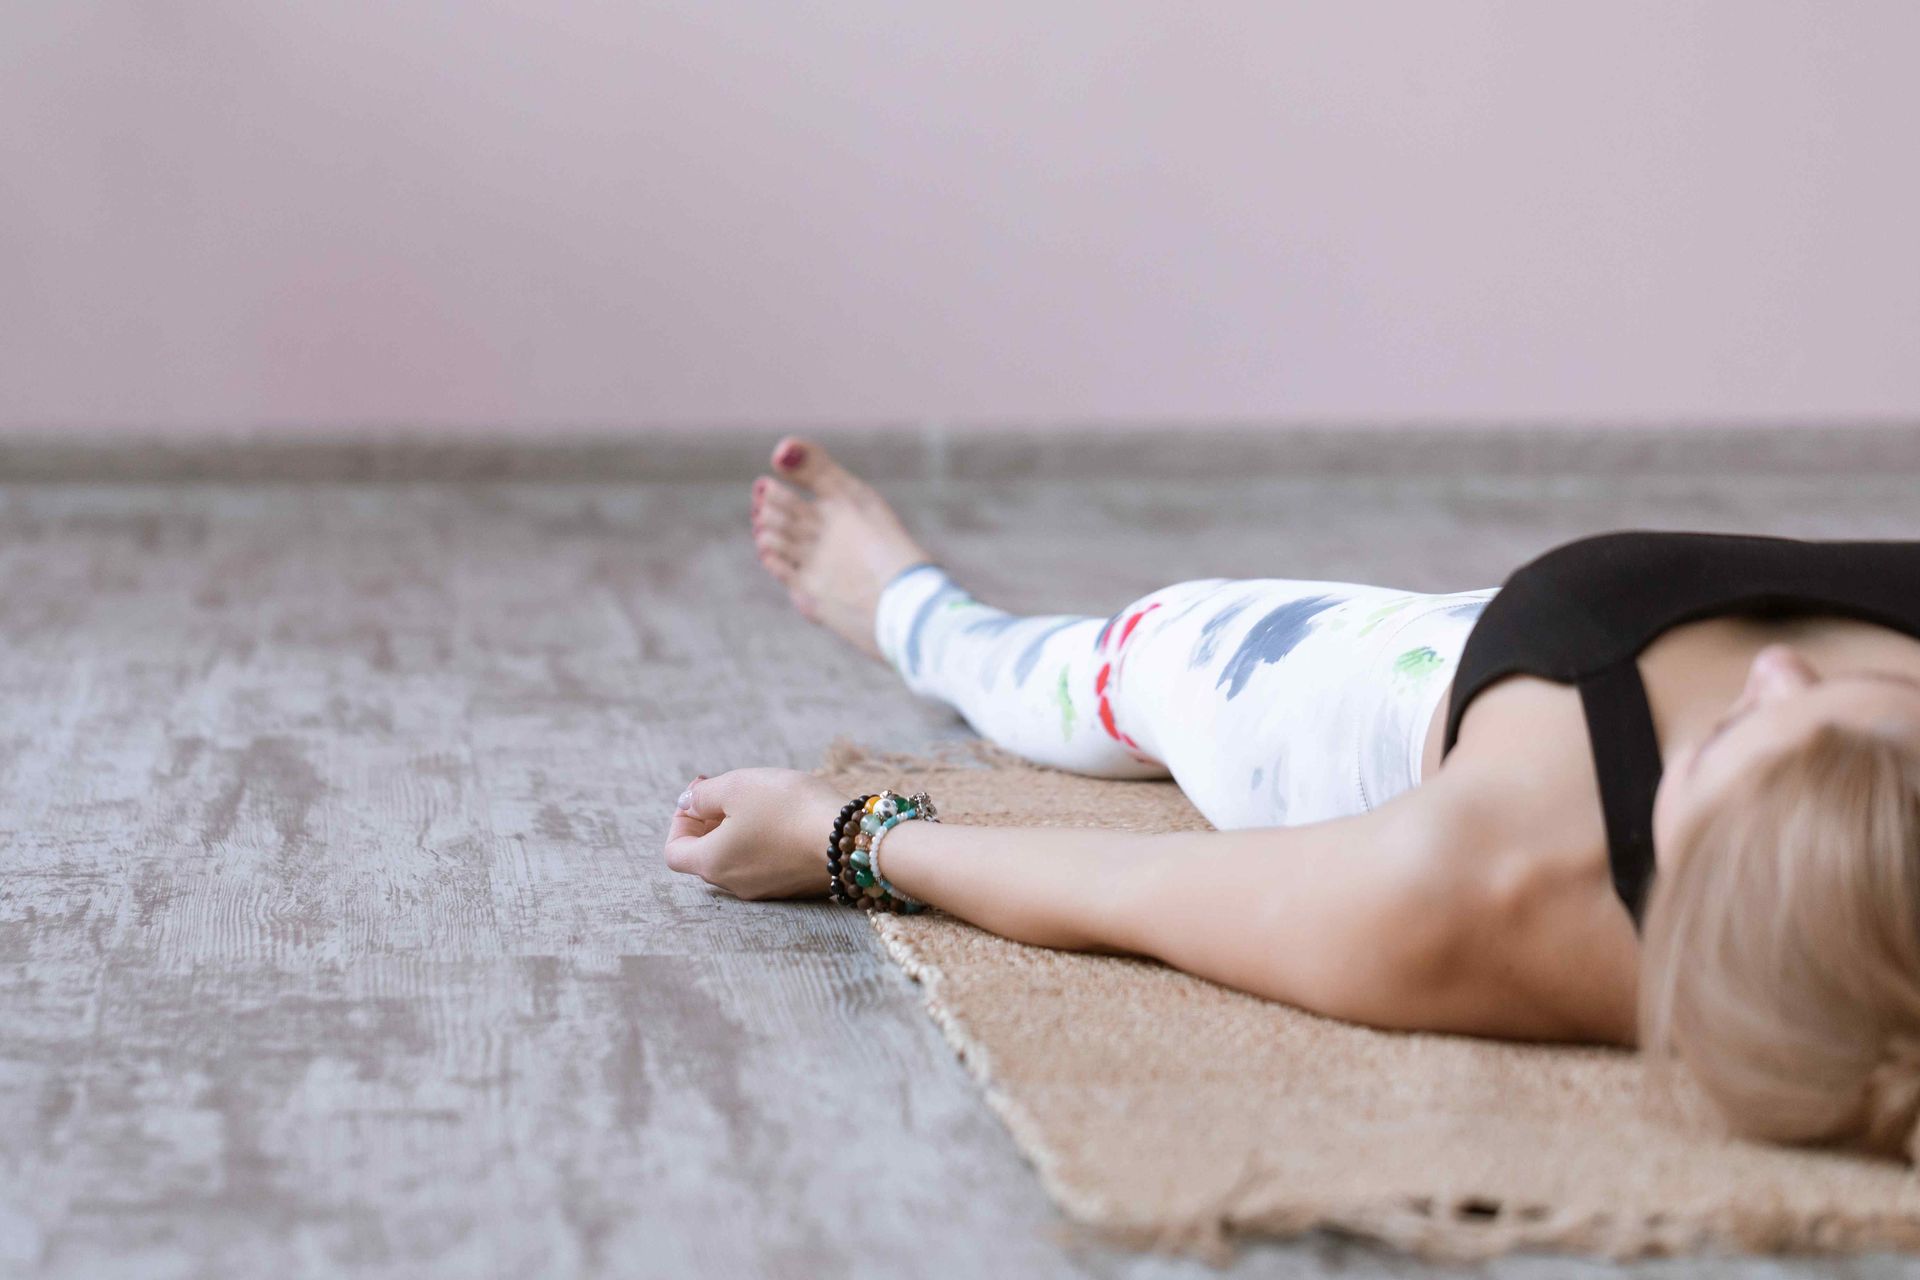 Woman lying on a mat performing yoga nidra